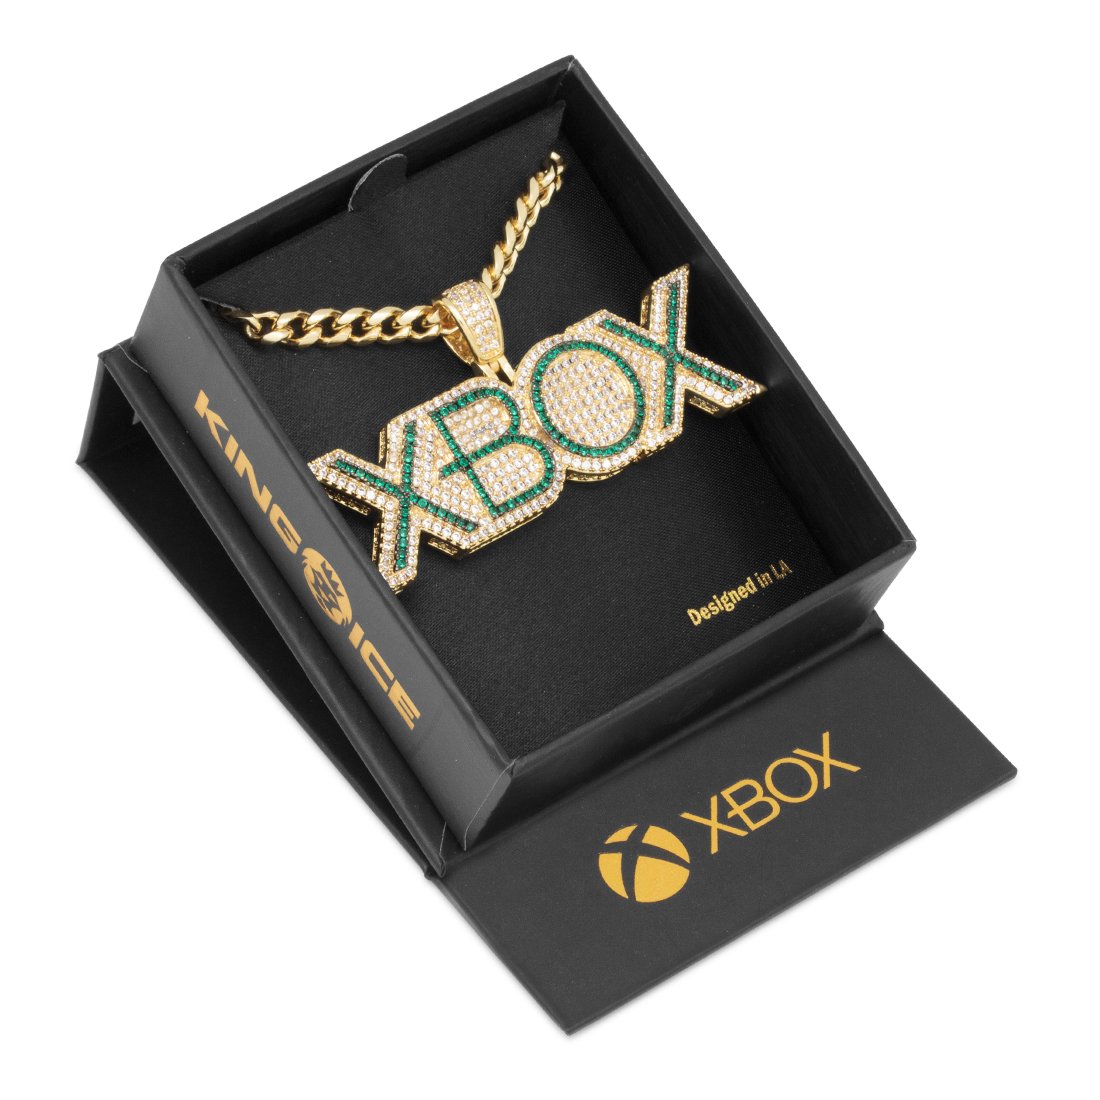 Xbox x King Ice - Emerald Xbox Necklace